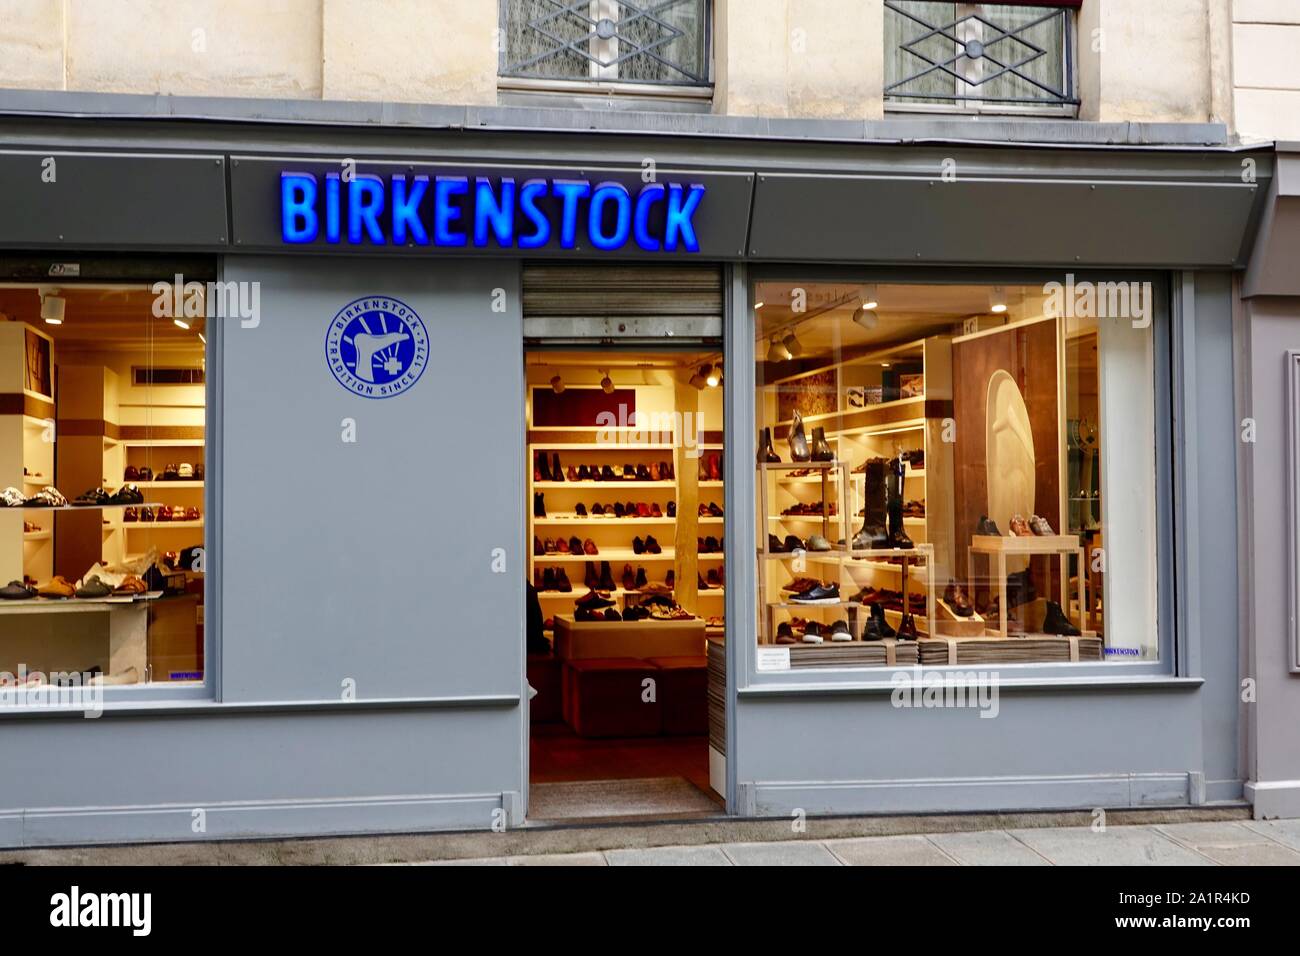 Birkenstock shoe store in the heart of 